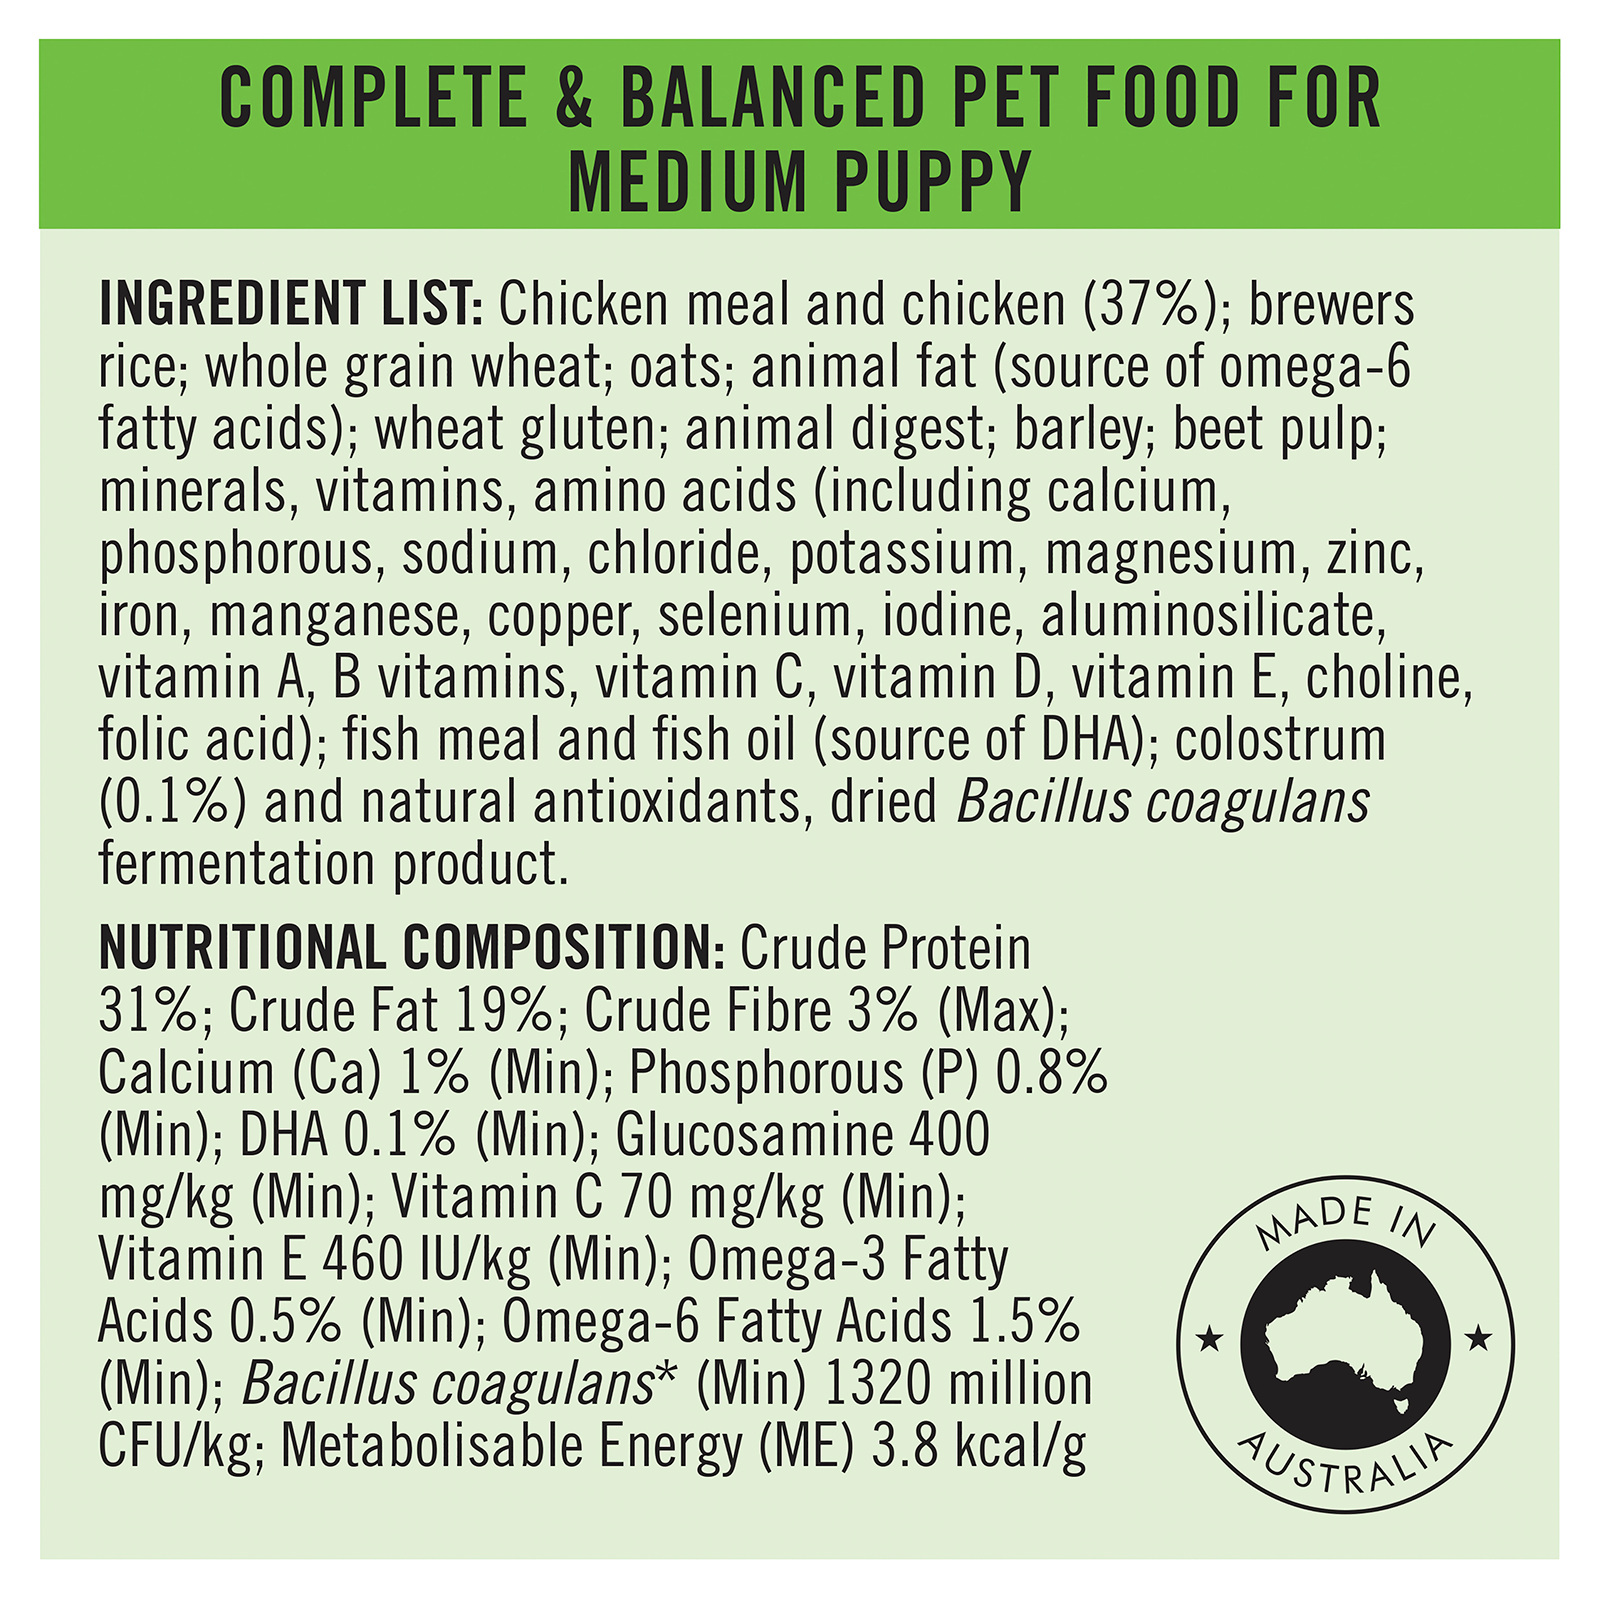 Pro Plan Dog Food Puppy Medium Breed Chicken